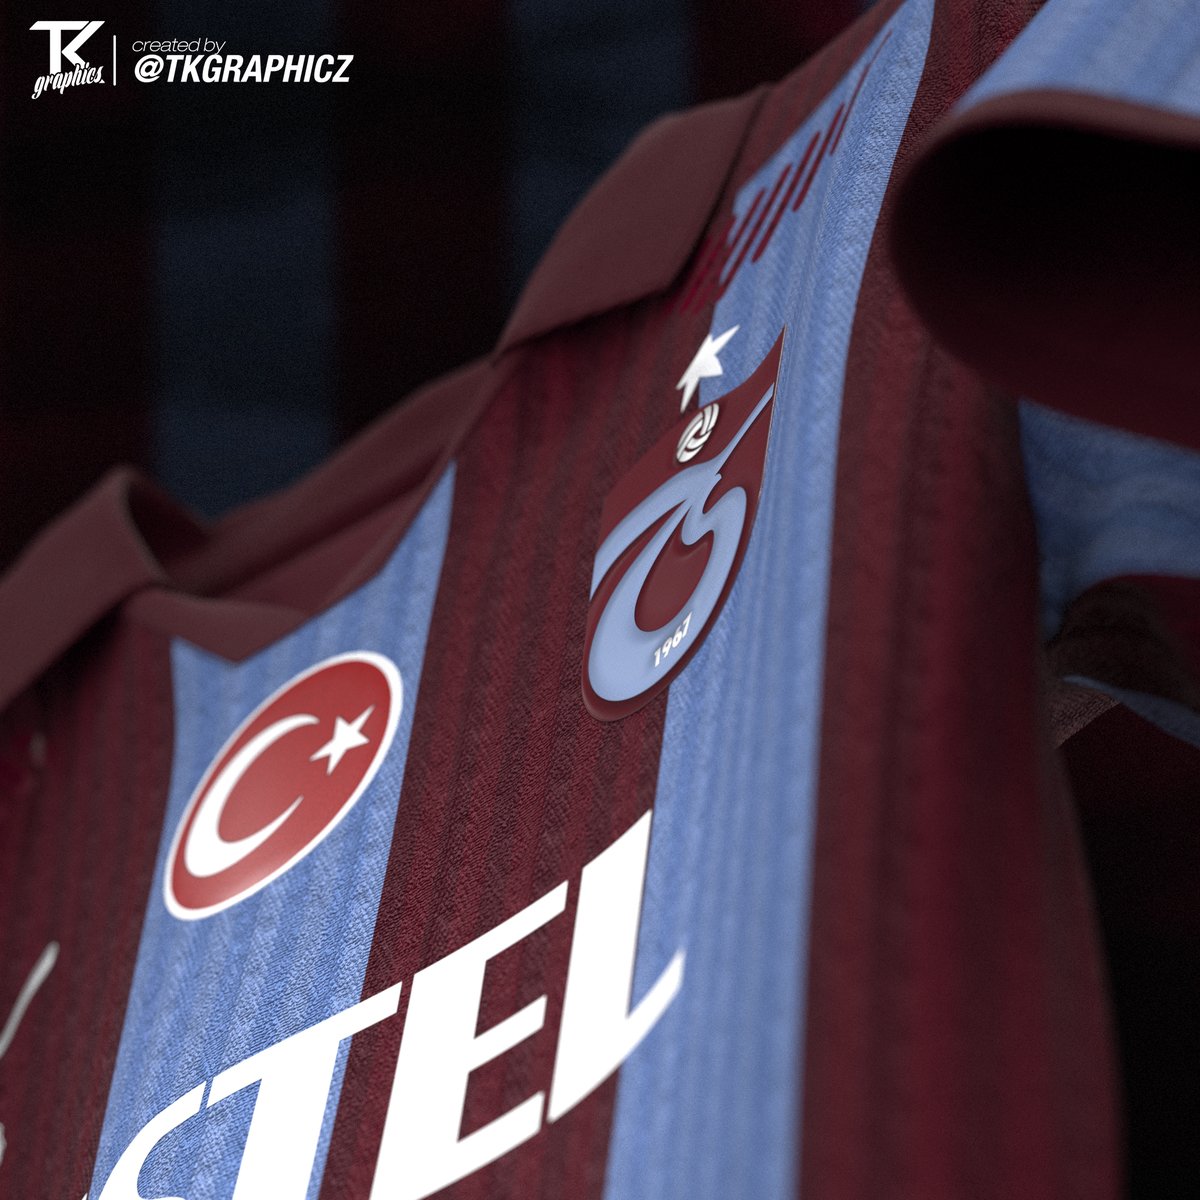 Trabzonspor x Puma | Çubuklu Tasarımı

___________________________________________________
#fantasykit #conceptkit #kit #jersey #shirt #football #design #Trabzonspor #çubuklu #çizgili #bordo #mavi #tshirt #trabzon #parçalı #çubuklu